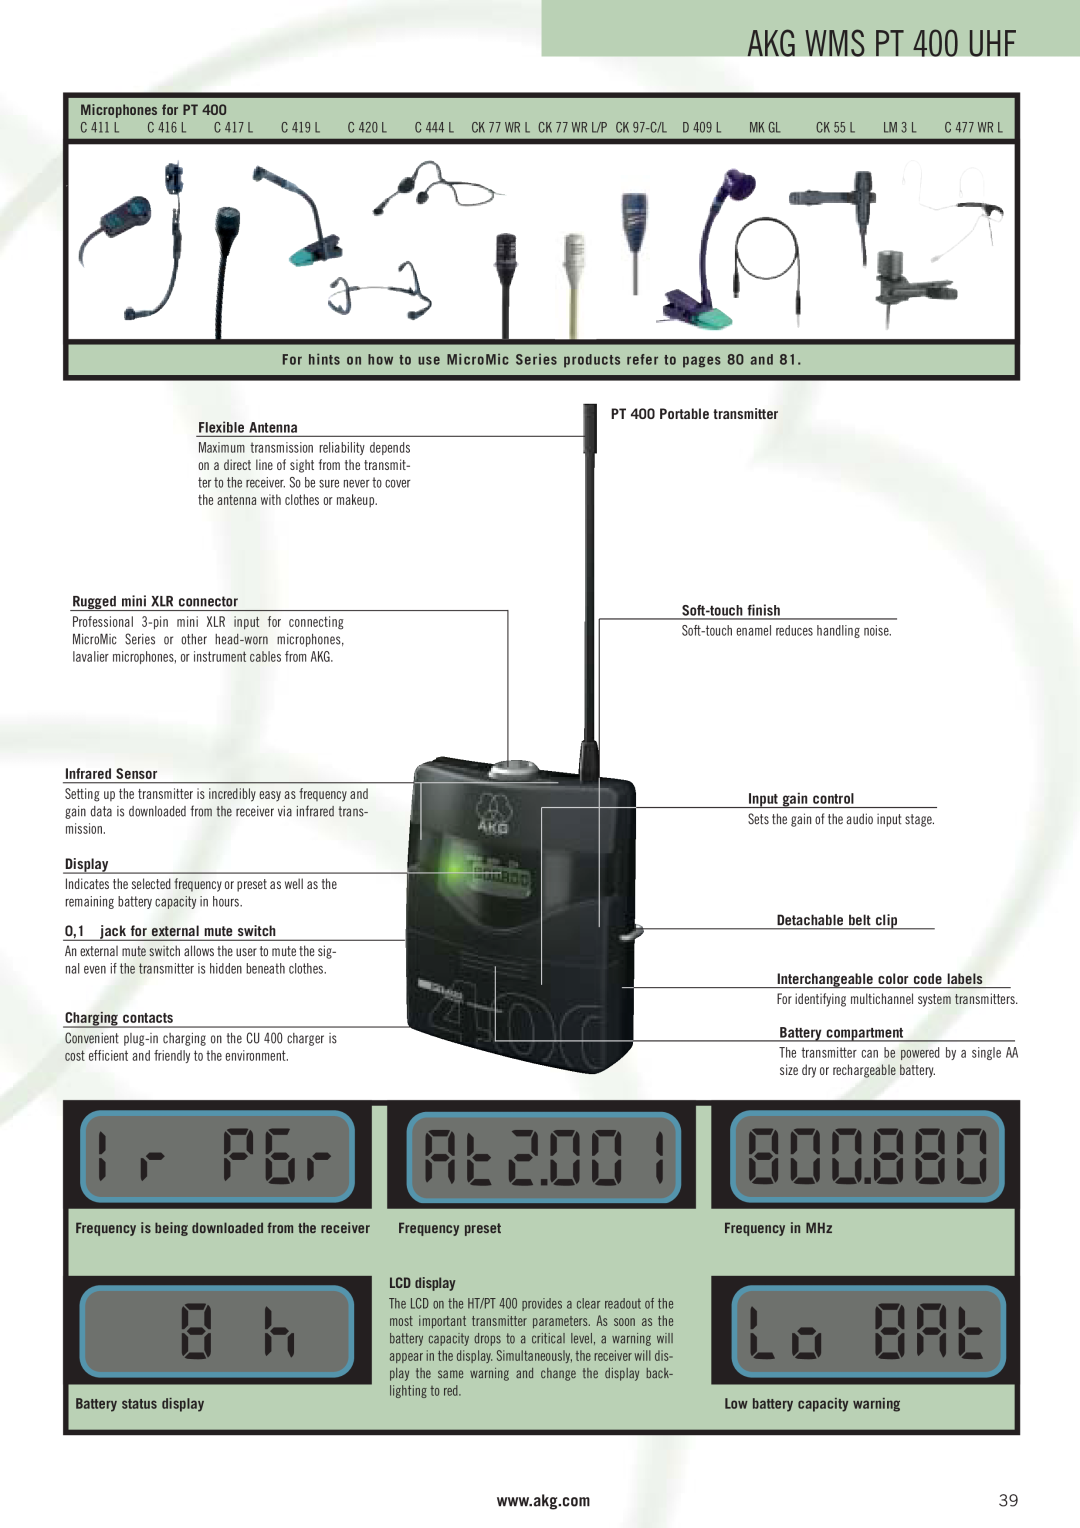 AKG Acoustics WMS 400 manual AKG WMS PT 400 UHF, Microphones for PT, PT 400 Portable transmitter Flexible Antenna, Display 